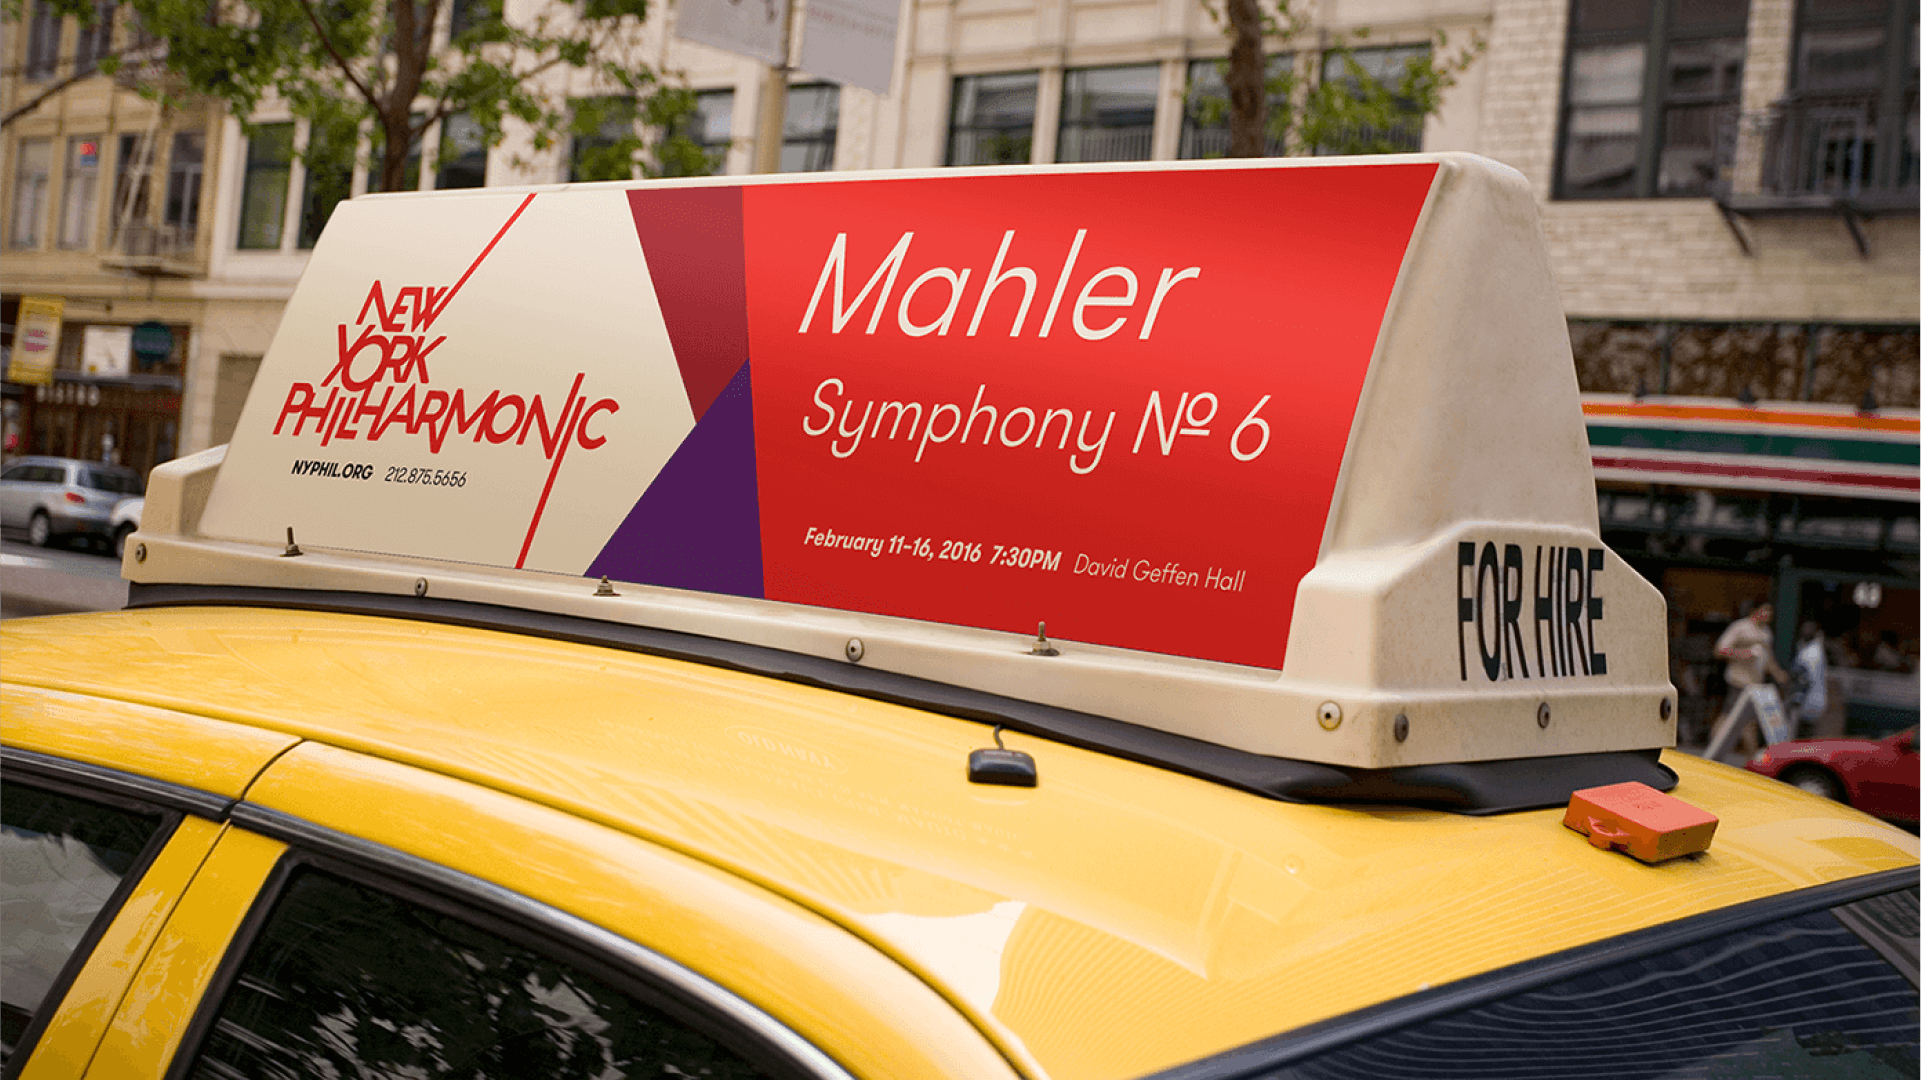 New York Philharmonic ad on a taxi